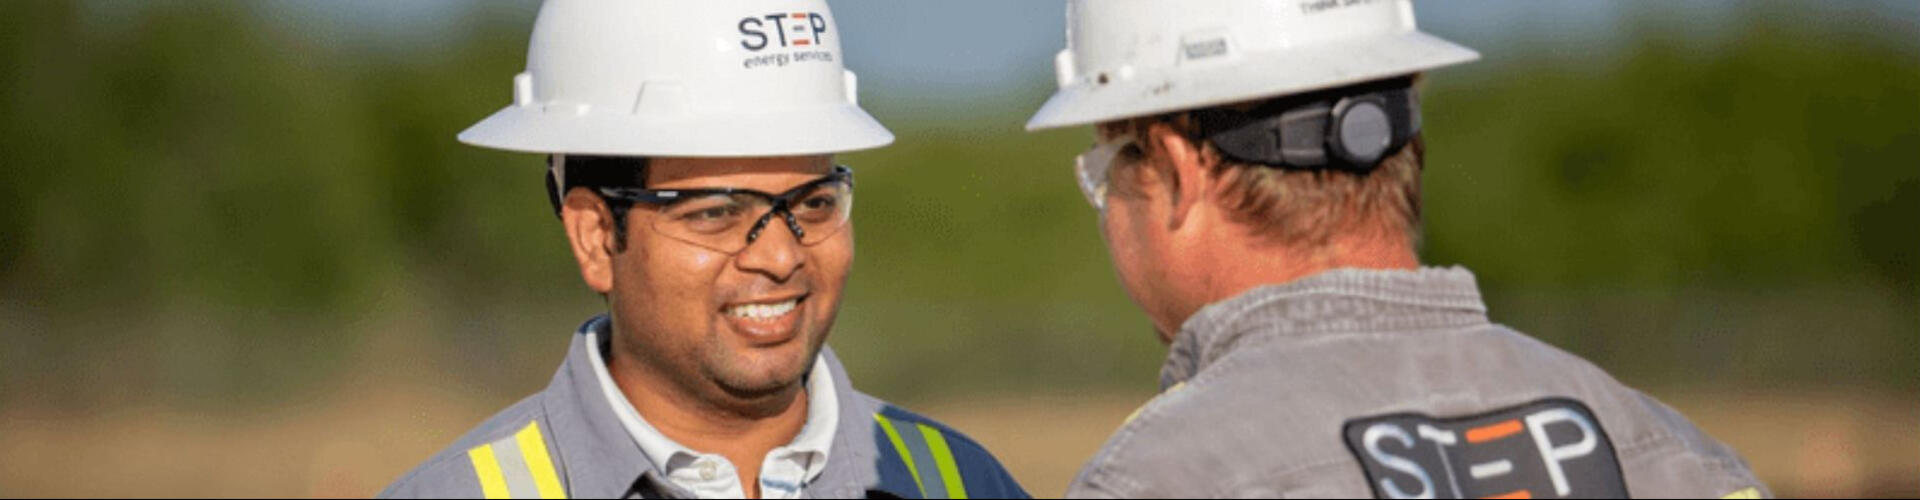 STEP Energy Services Ltd cover